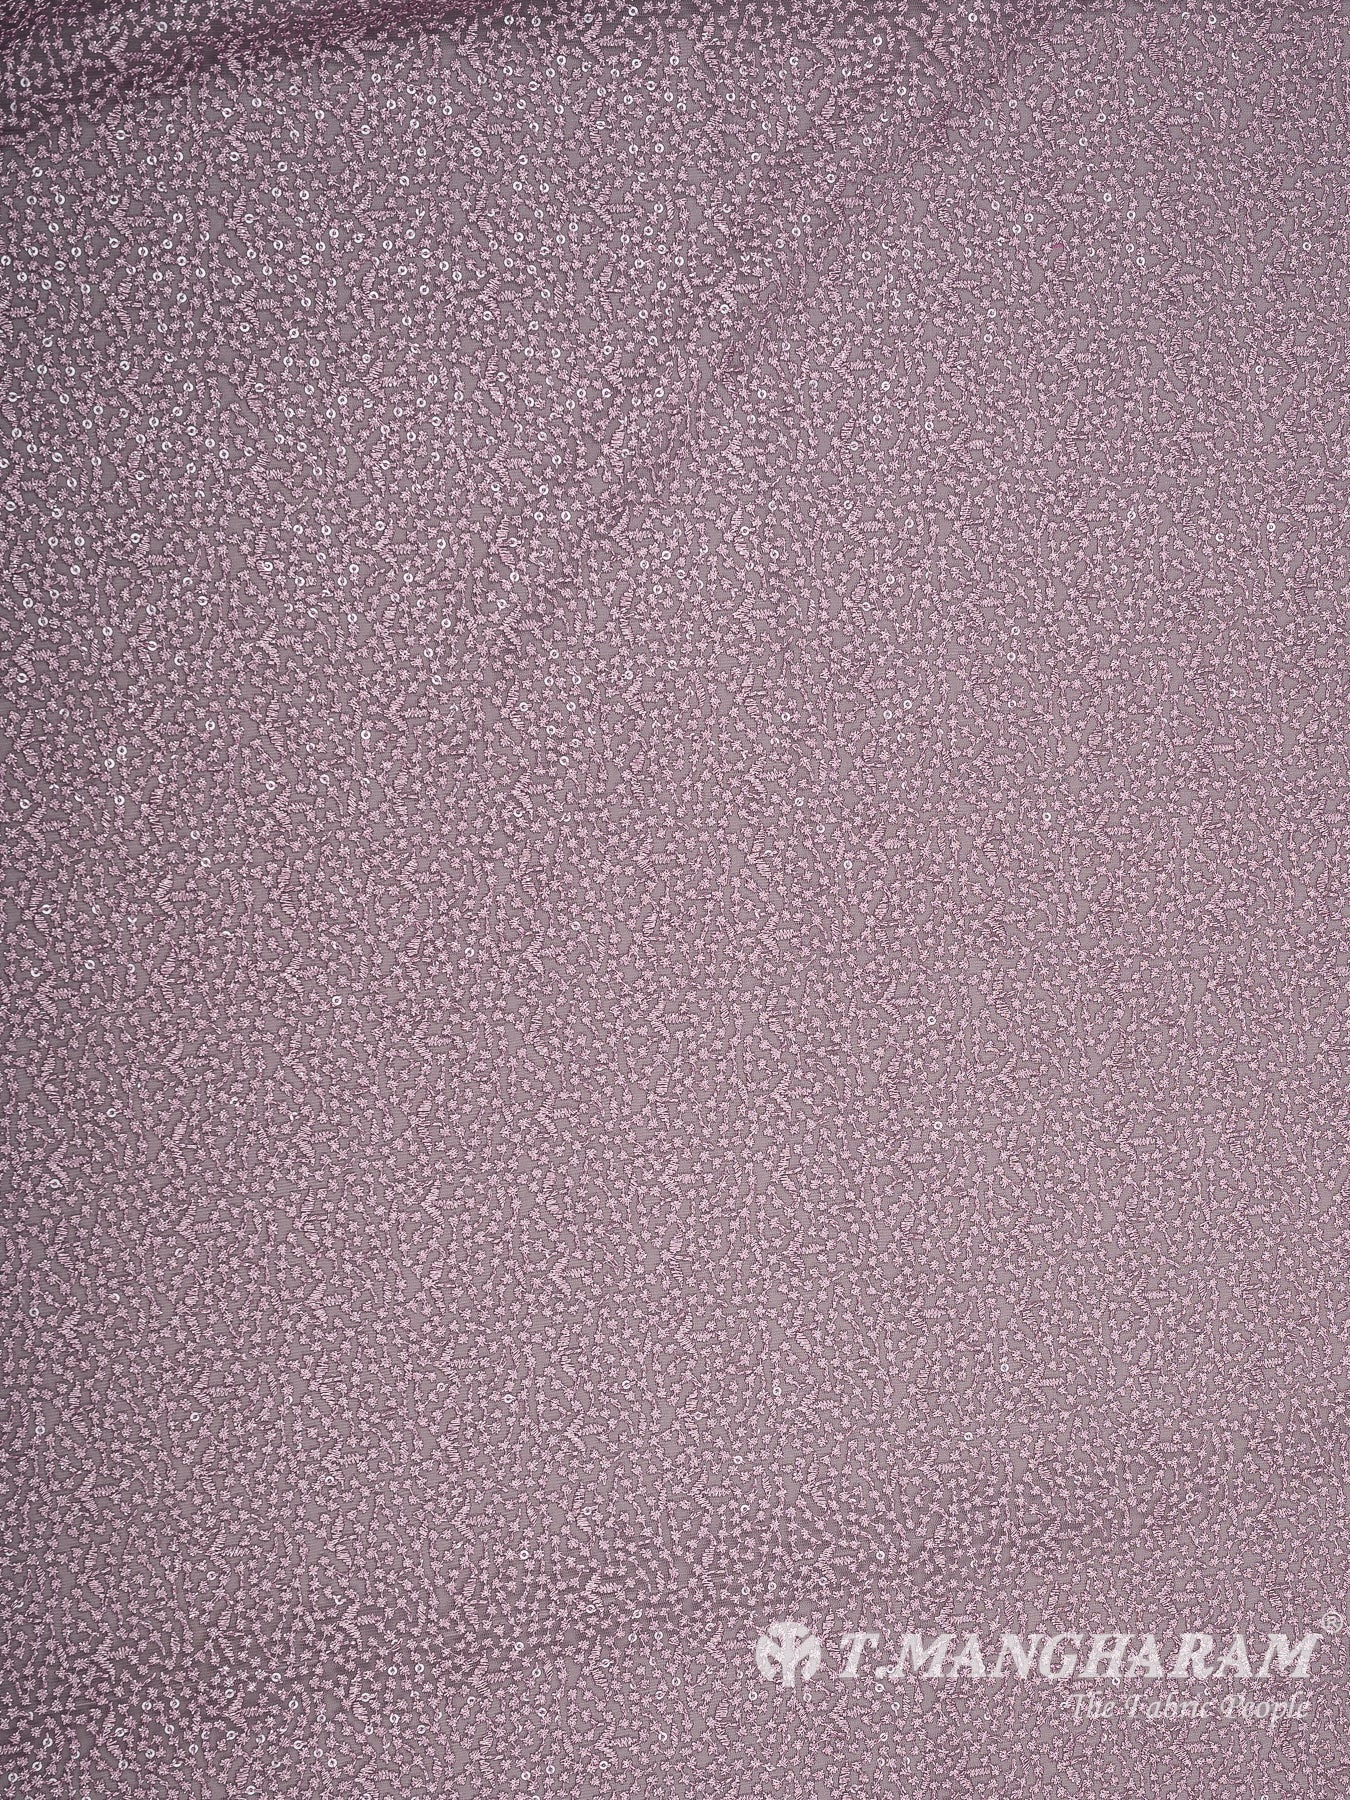 Violet Net Fabric - EB6593 view-3